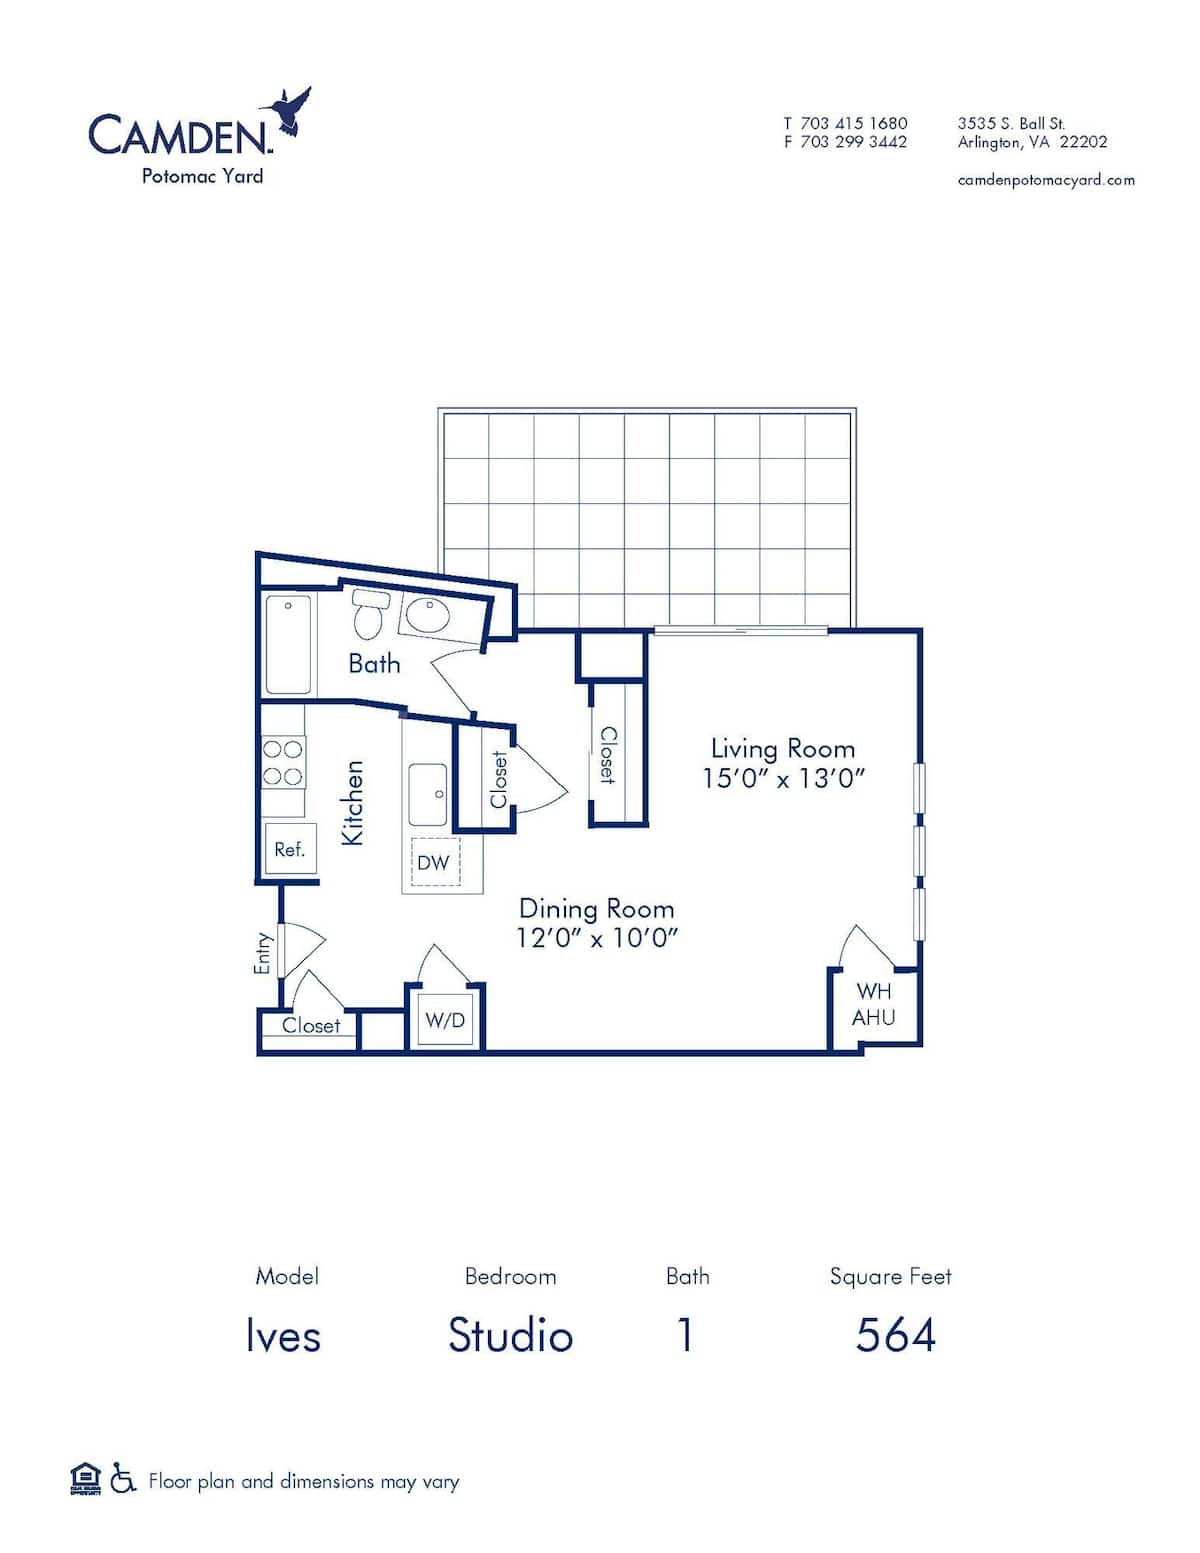 Floorplan diagram for Ives, showing Studio